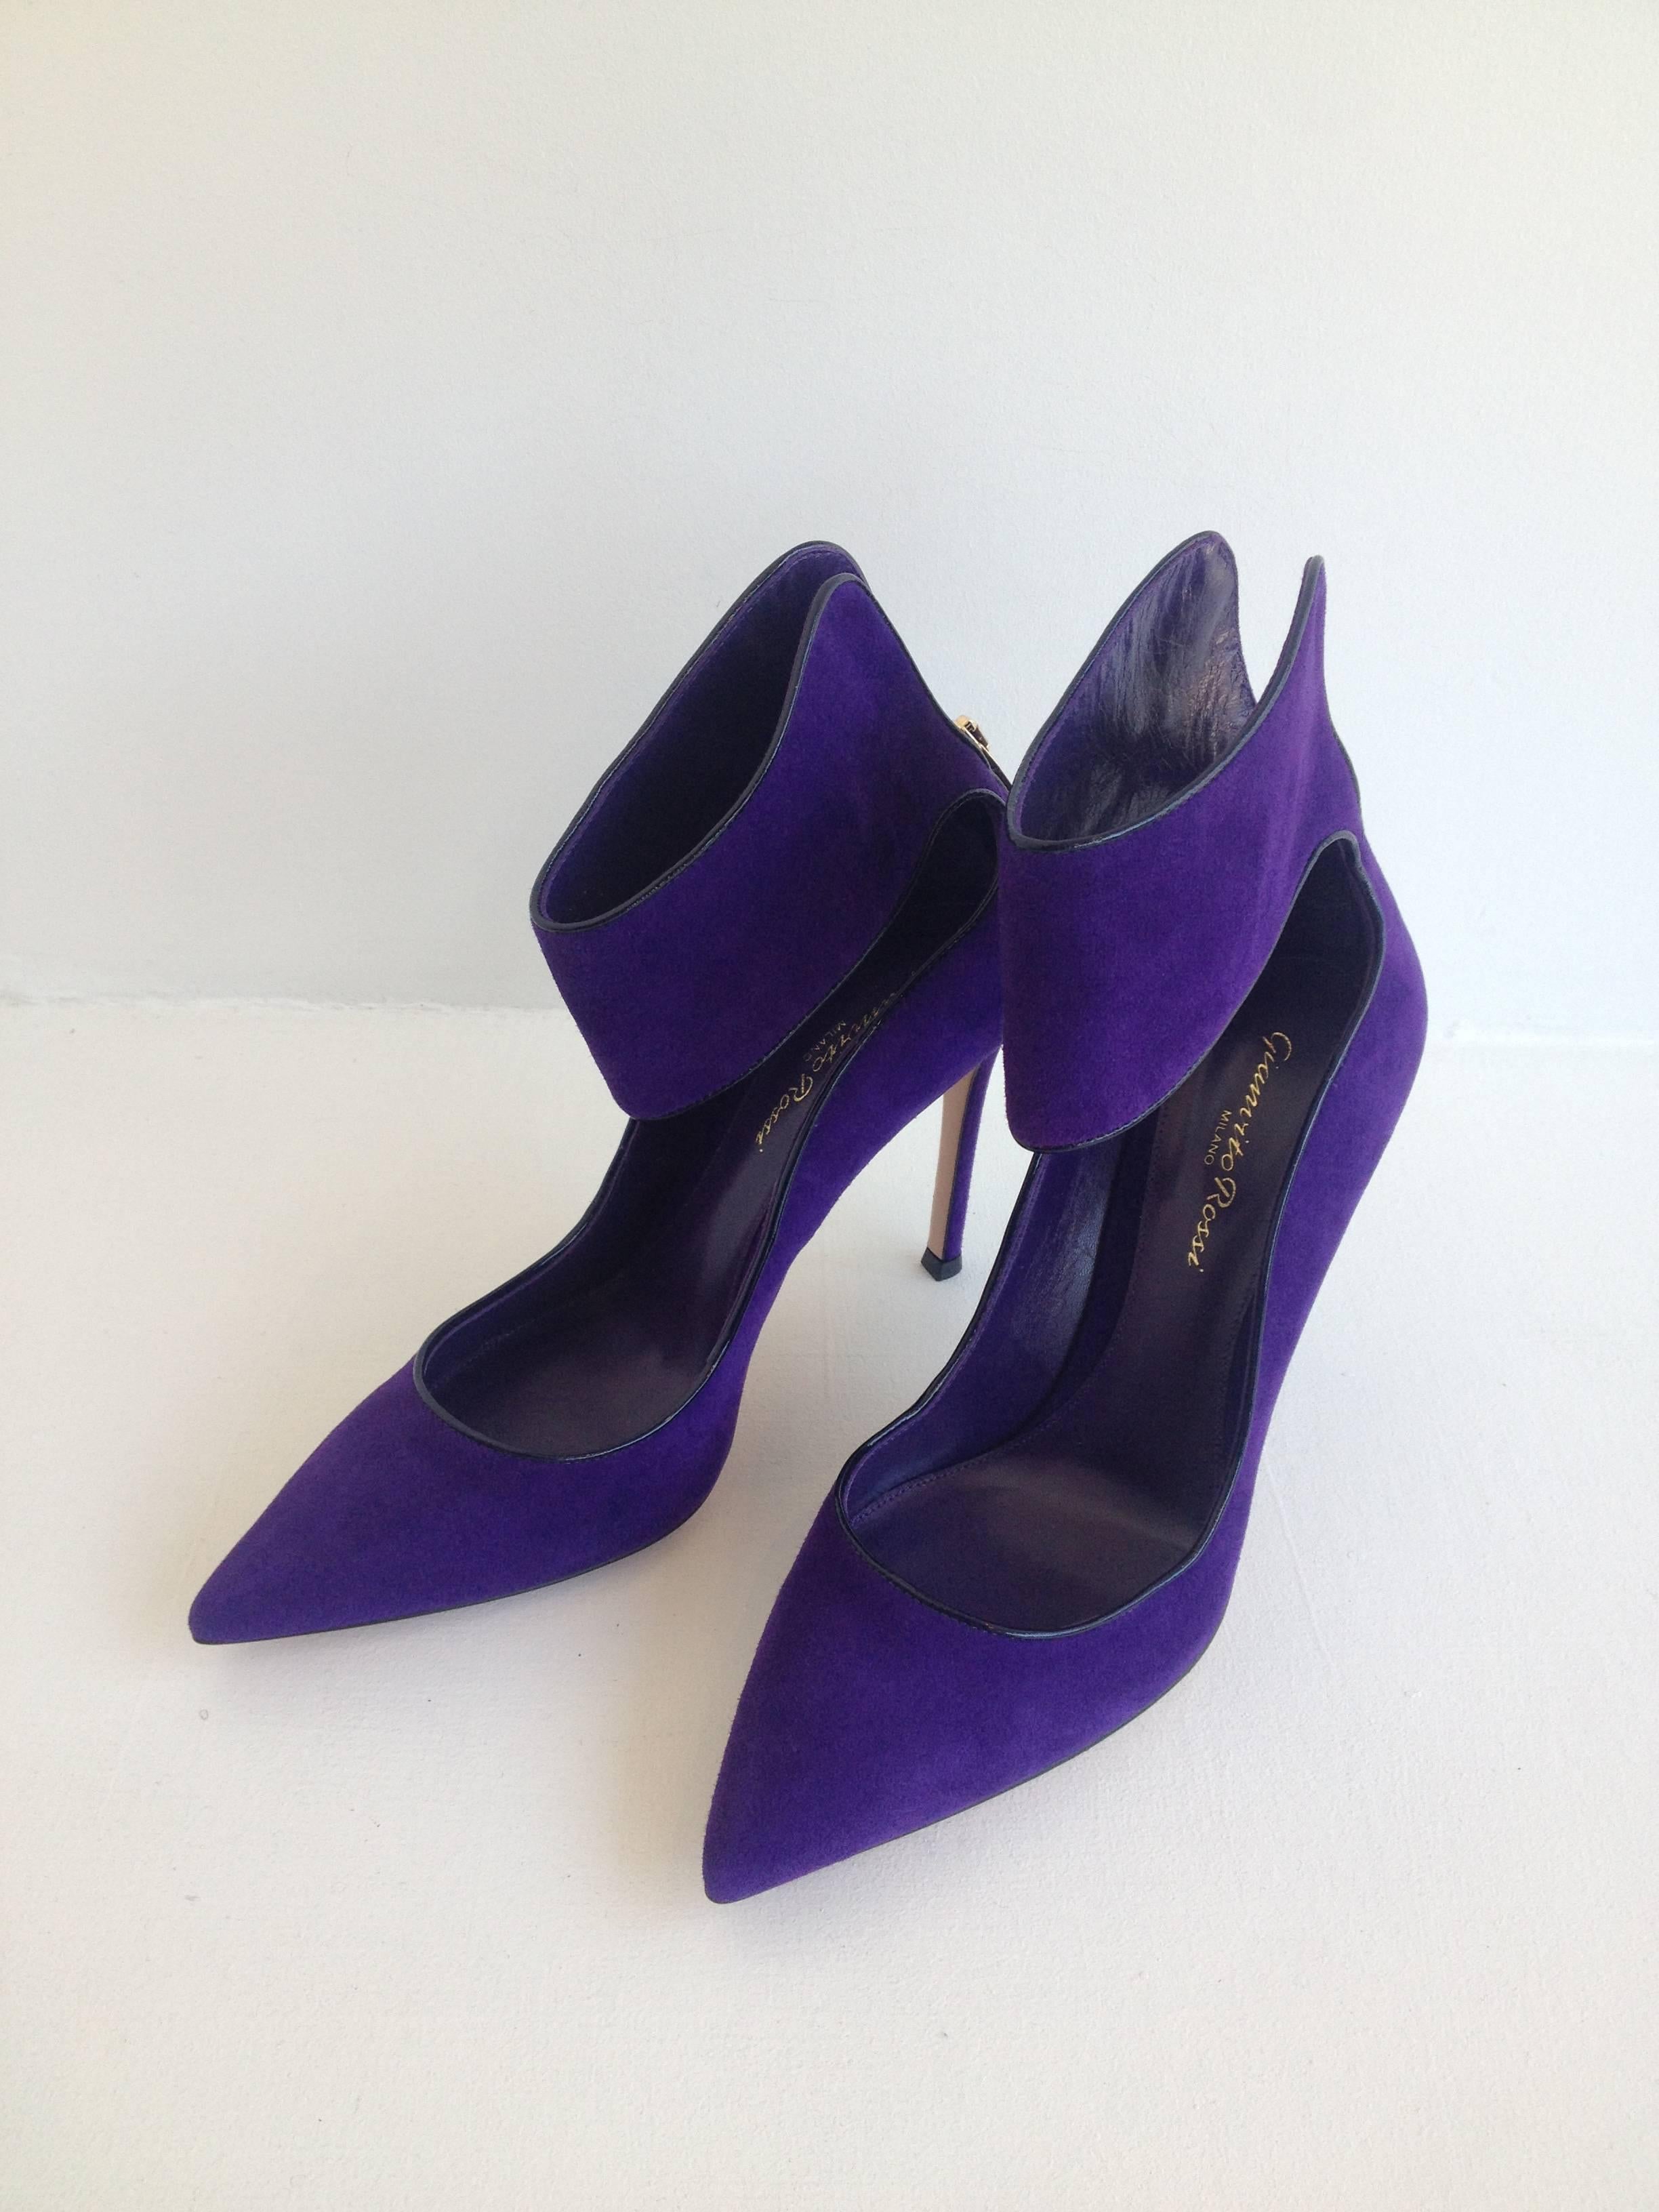 Gianvito Rossi Purple Suede Cuff Heels Size 37.5 (7) In New Condition For Sale In San Francisco, CA